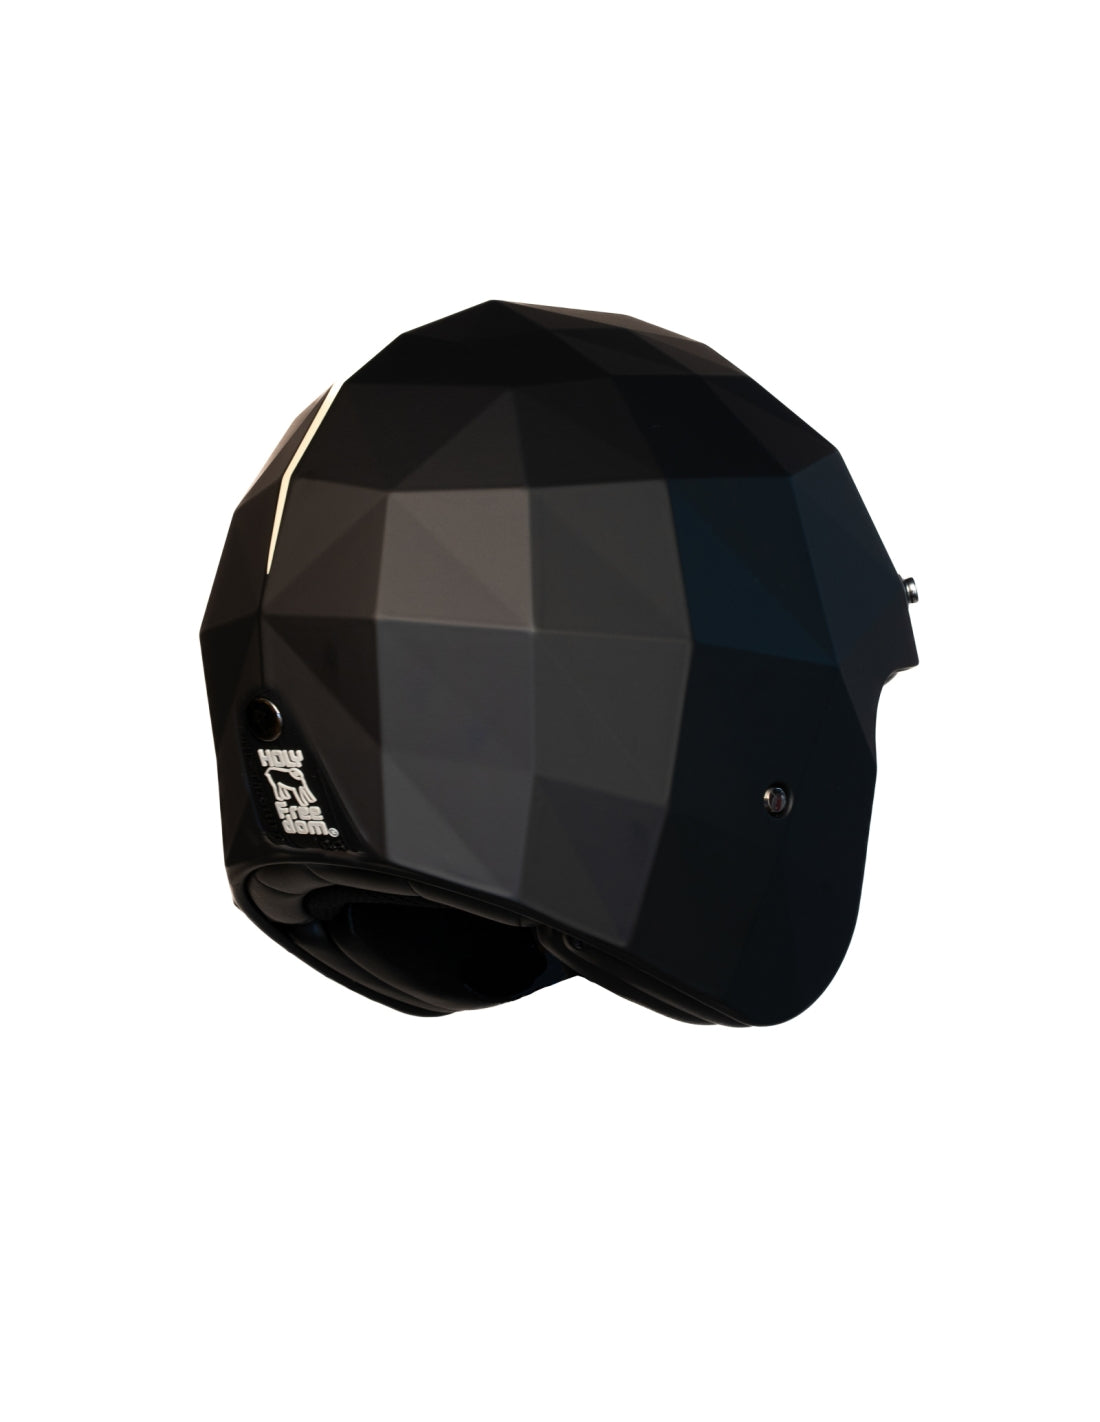 Holyfreedom Stealth CE Helmet - Matt Black